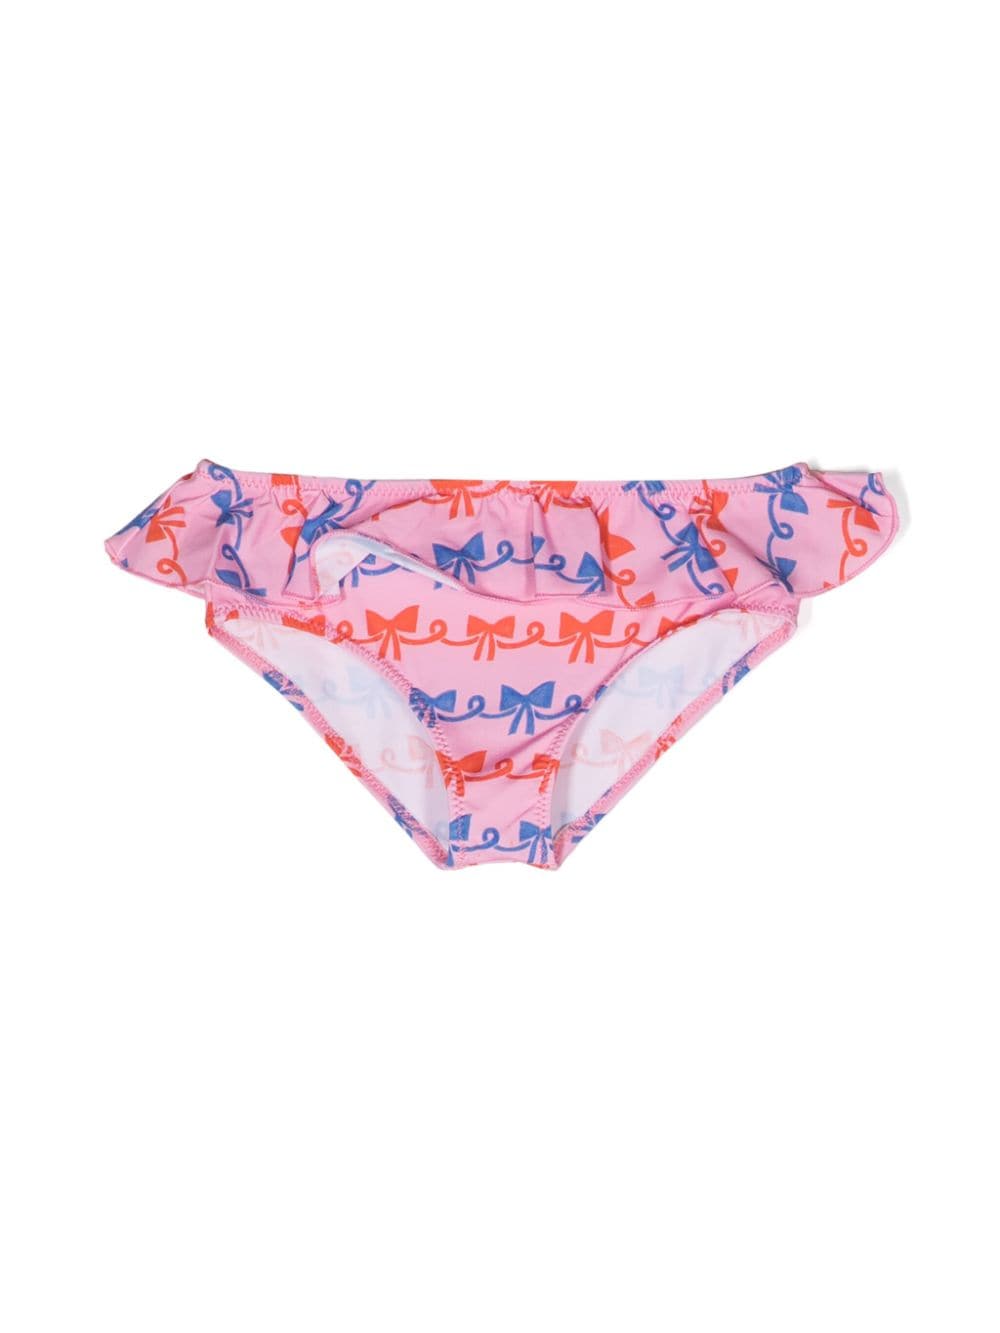 Bobo Choses Ribbon Bow ruffled bikini bottoms - Pink von Bobo Choses